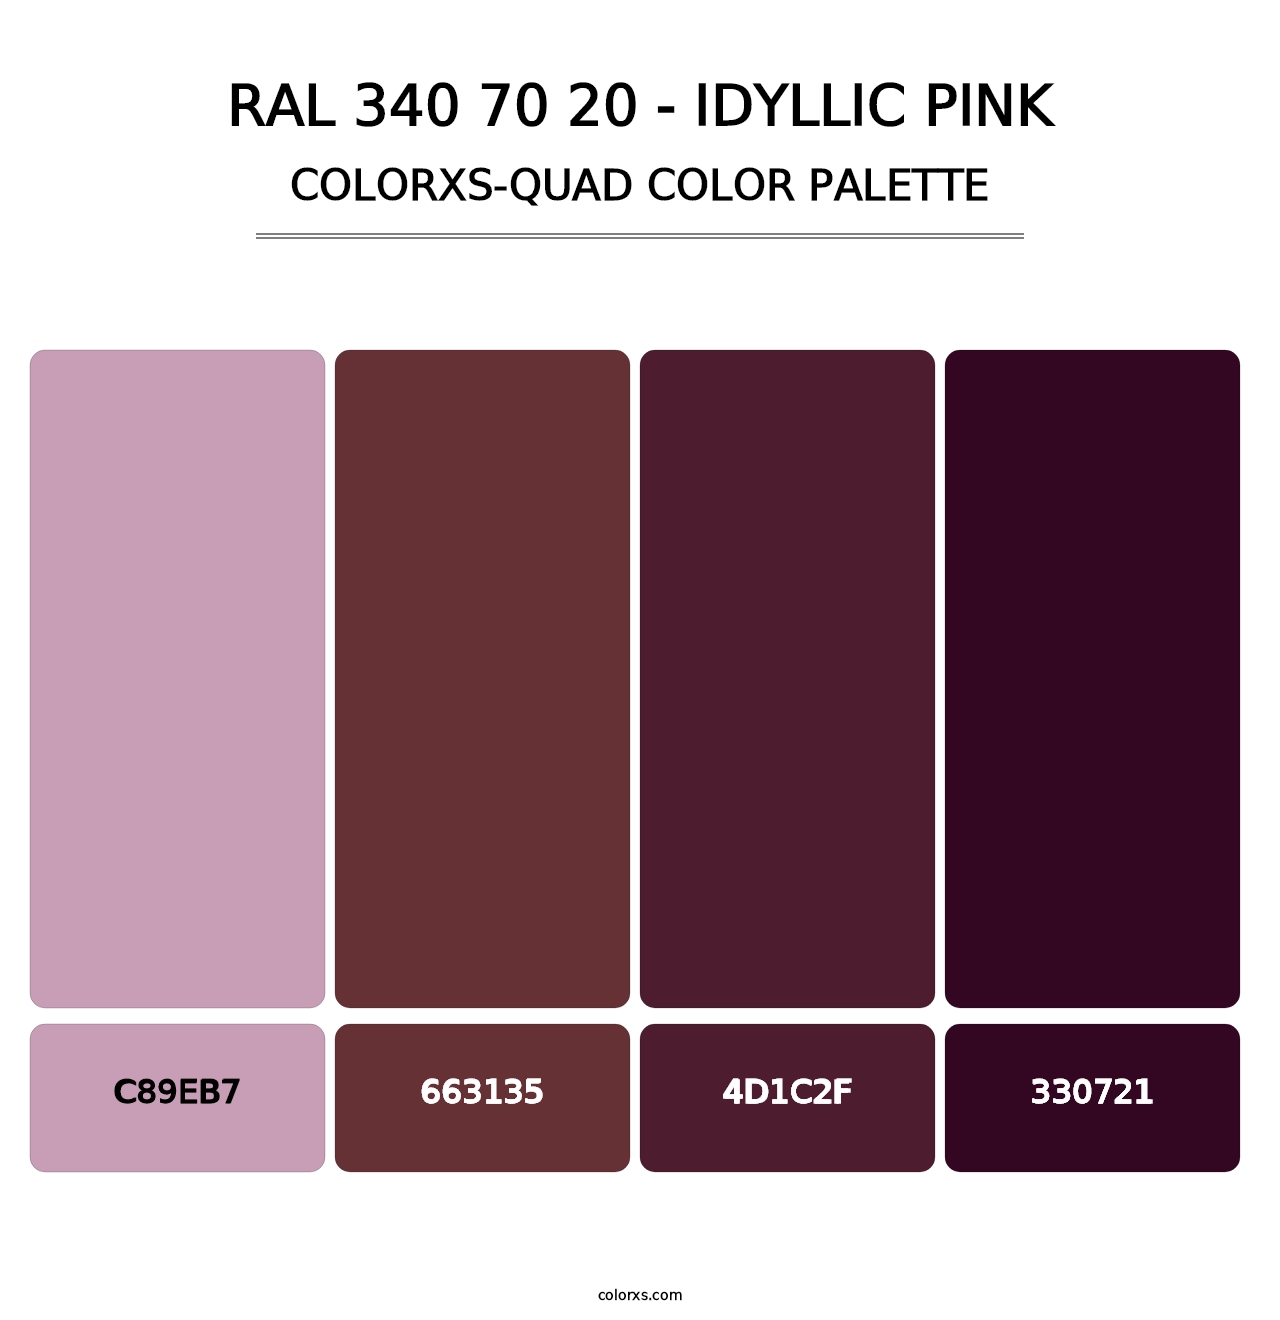 RAL 340 70 20 - Idyllic Pink - Colorxs Quad Palette